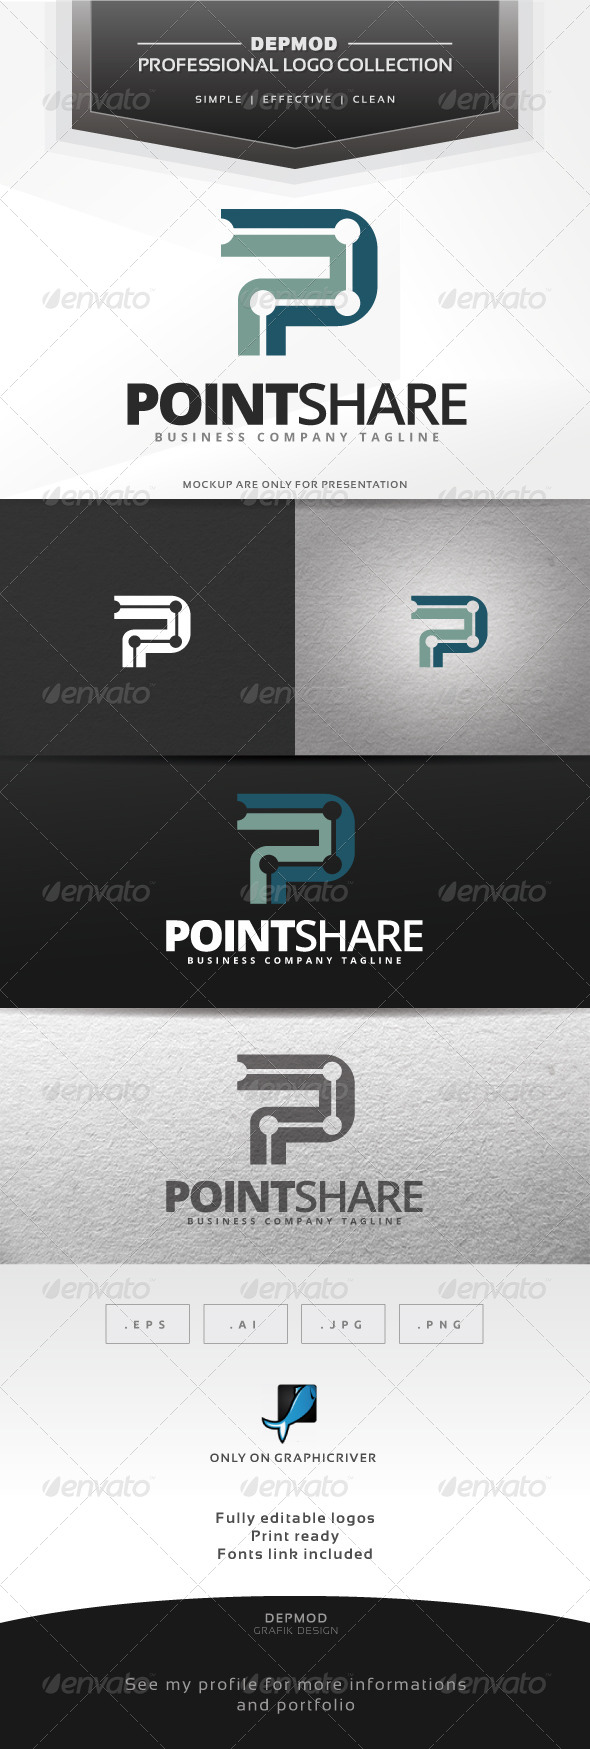 Point Share Logo